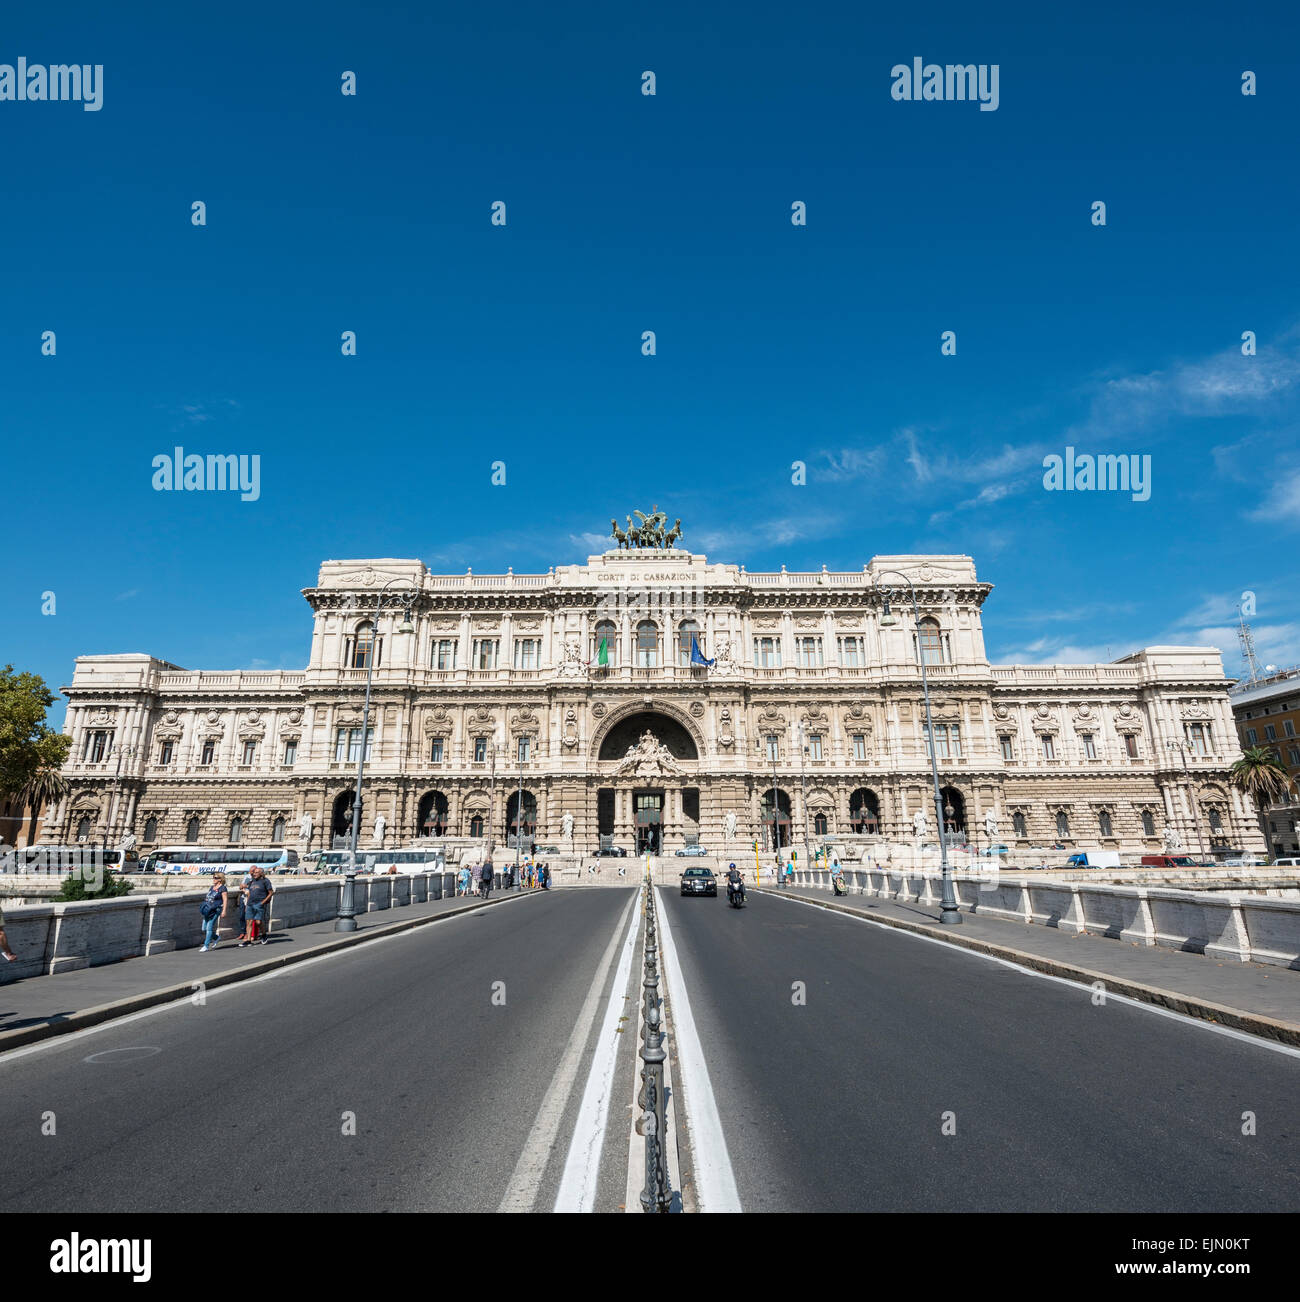 Court of Cassation, Supreme Court of Cassation, Palazzo di Giustizia or Palace of Justice, Rome, Lazio, Italy Stock Photo